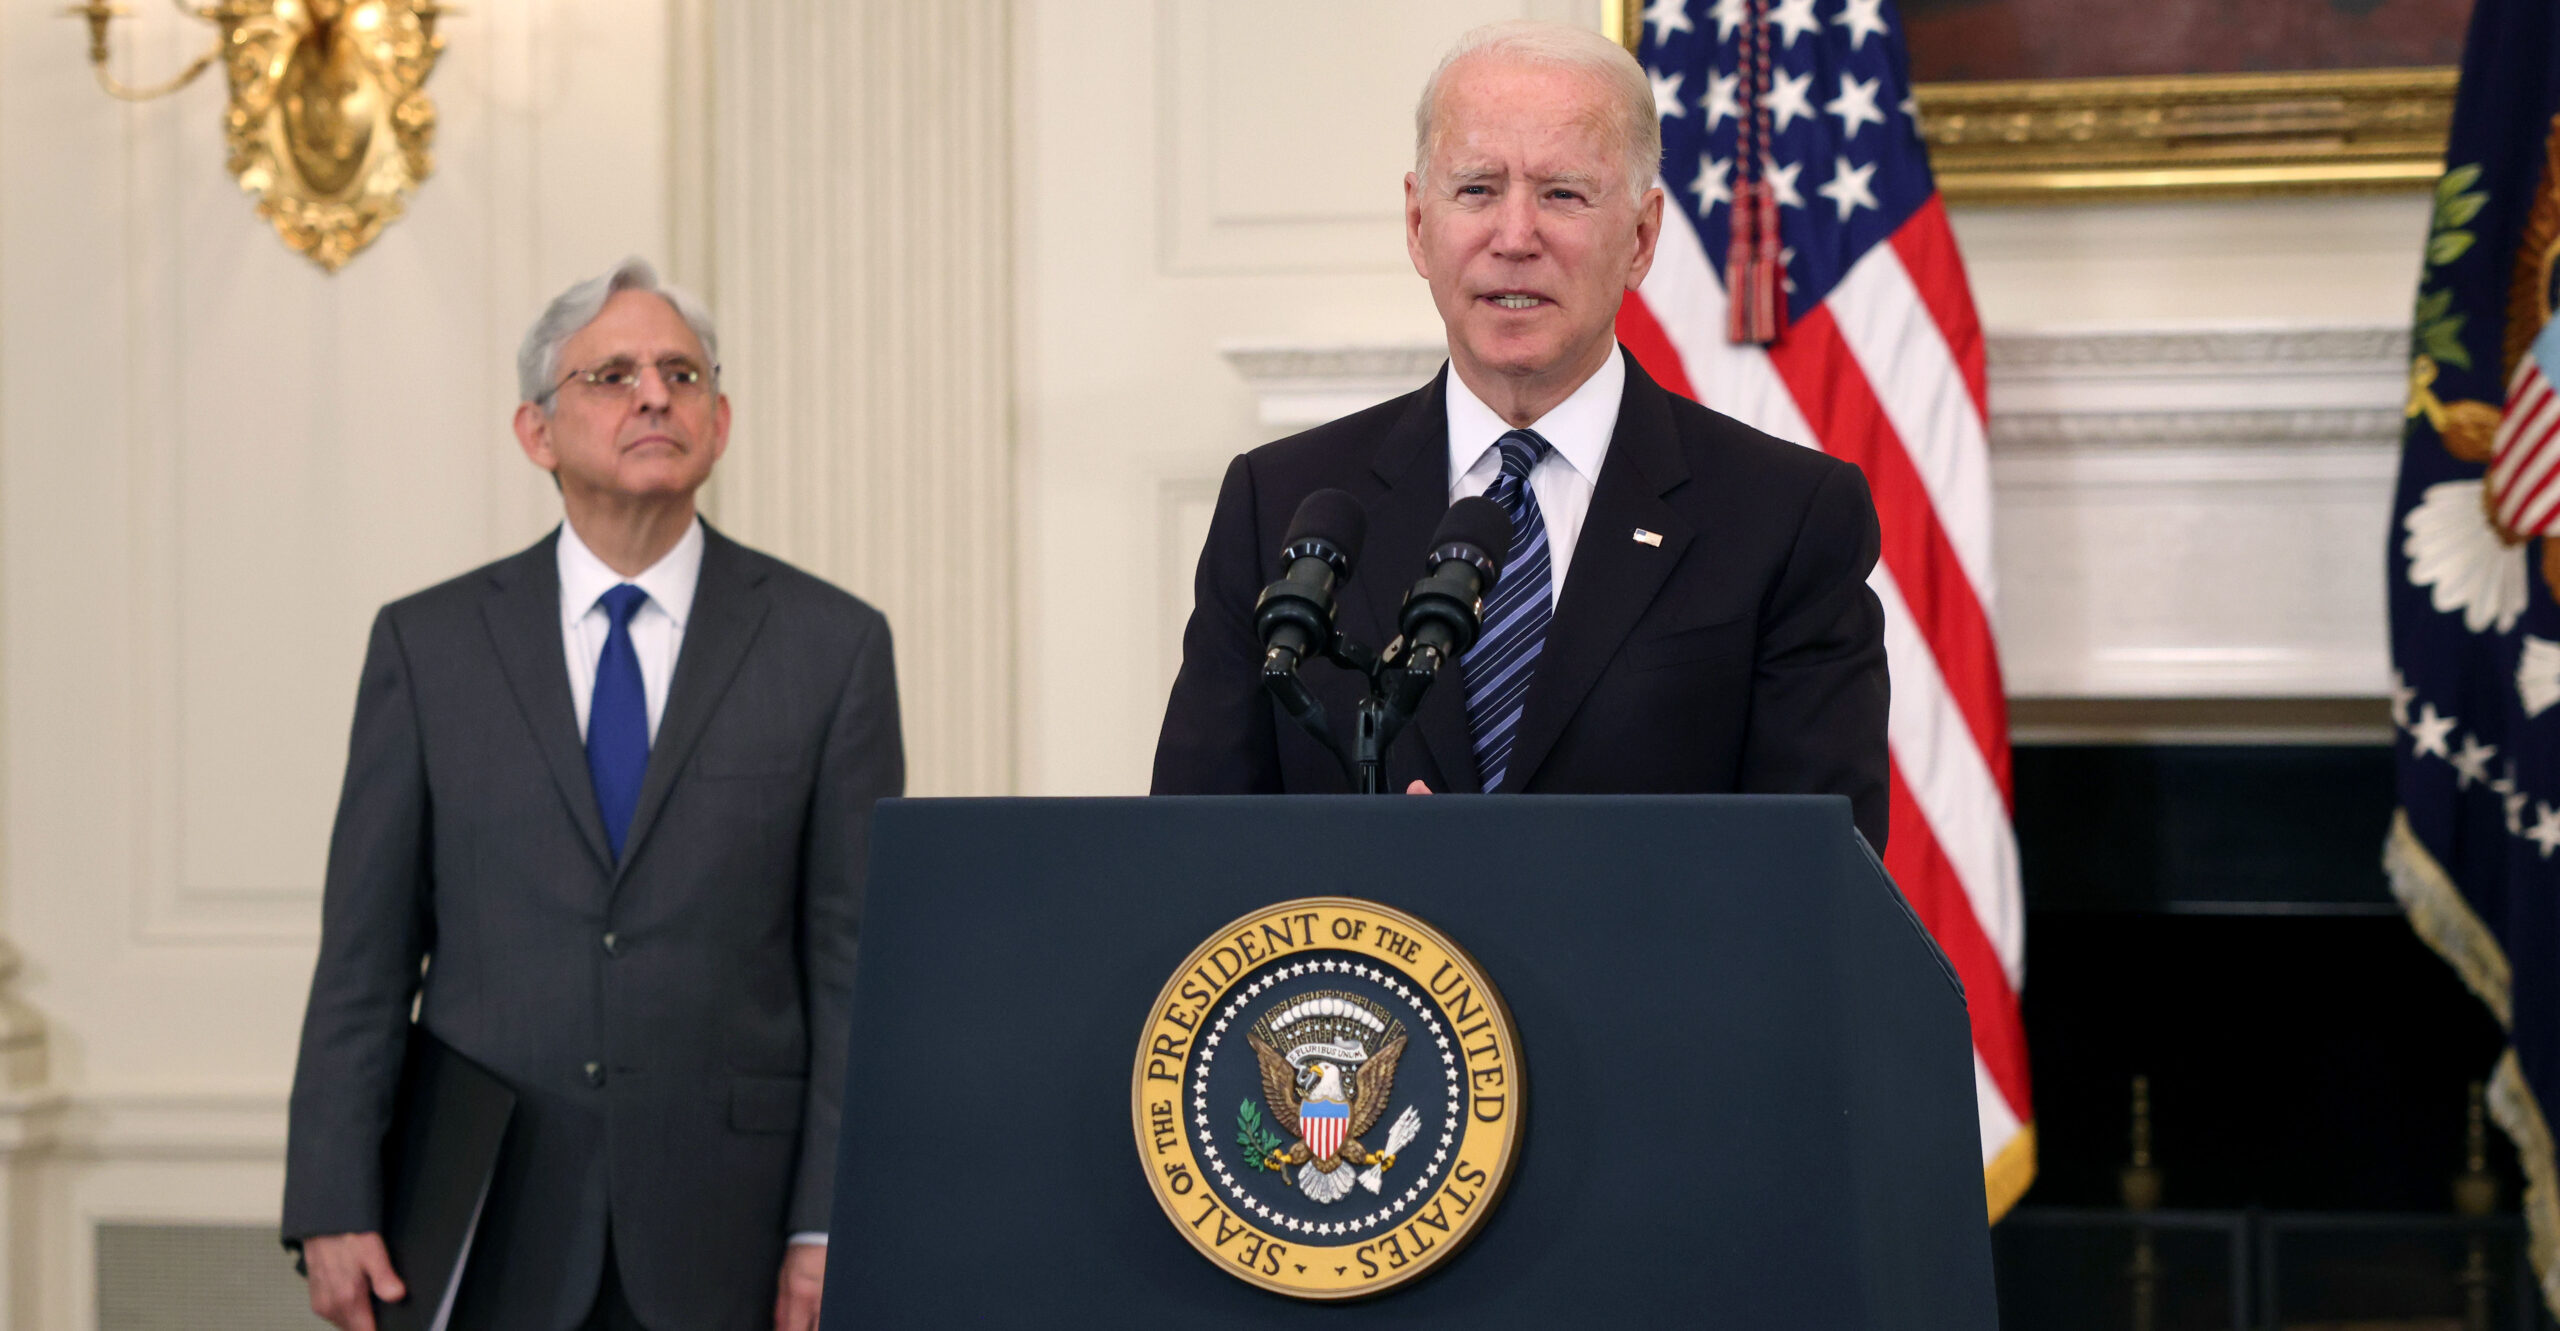 Biden Backs Gun Control, Not Defunding Police, in New Executive Actions